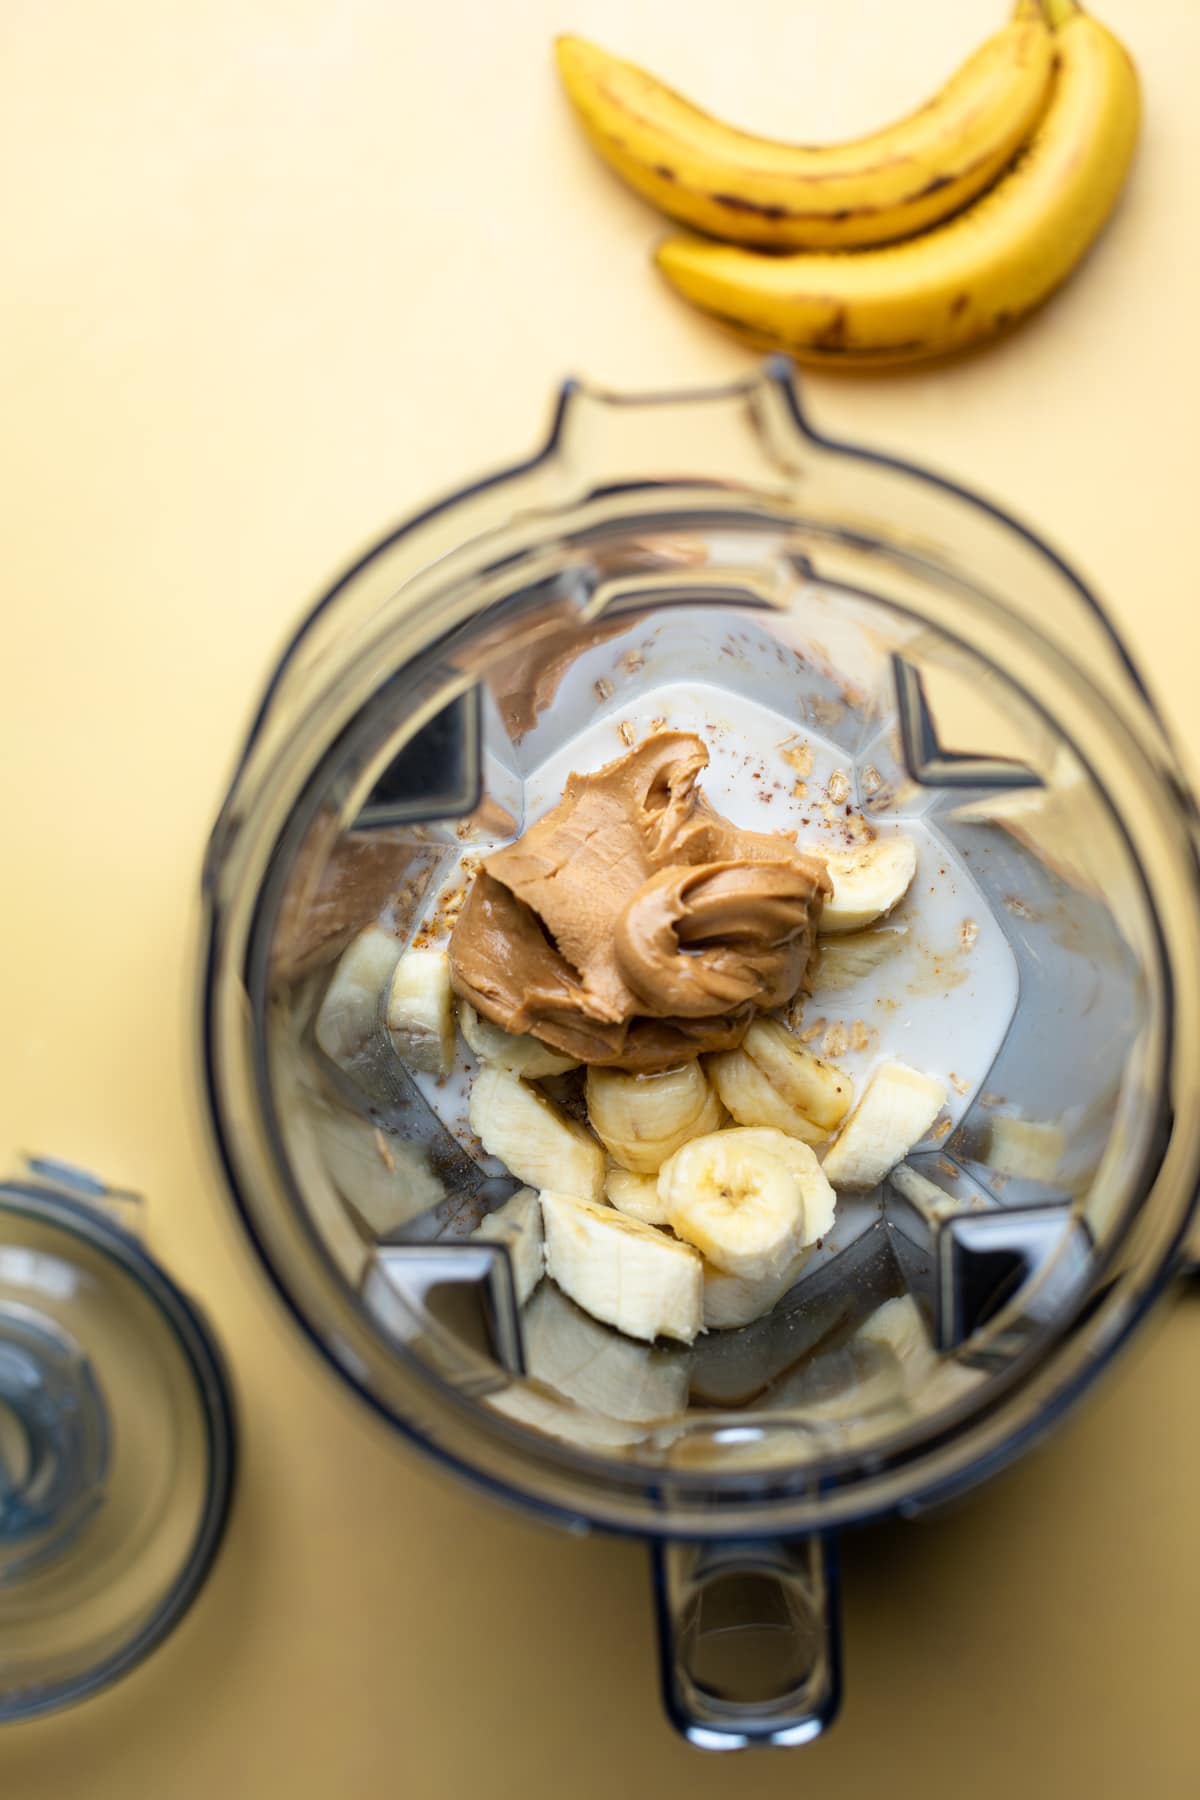 Blender of ingredients including bananas and peanut butter.